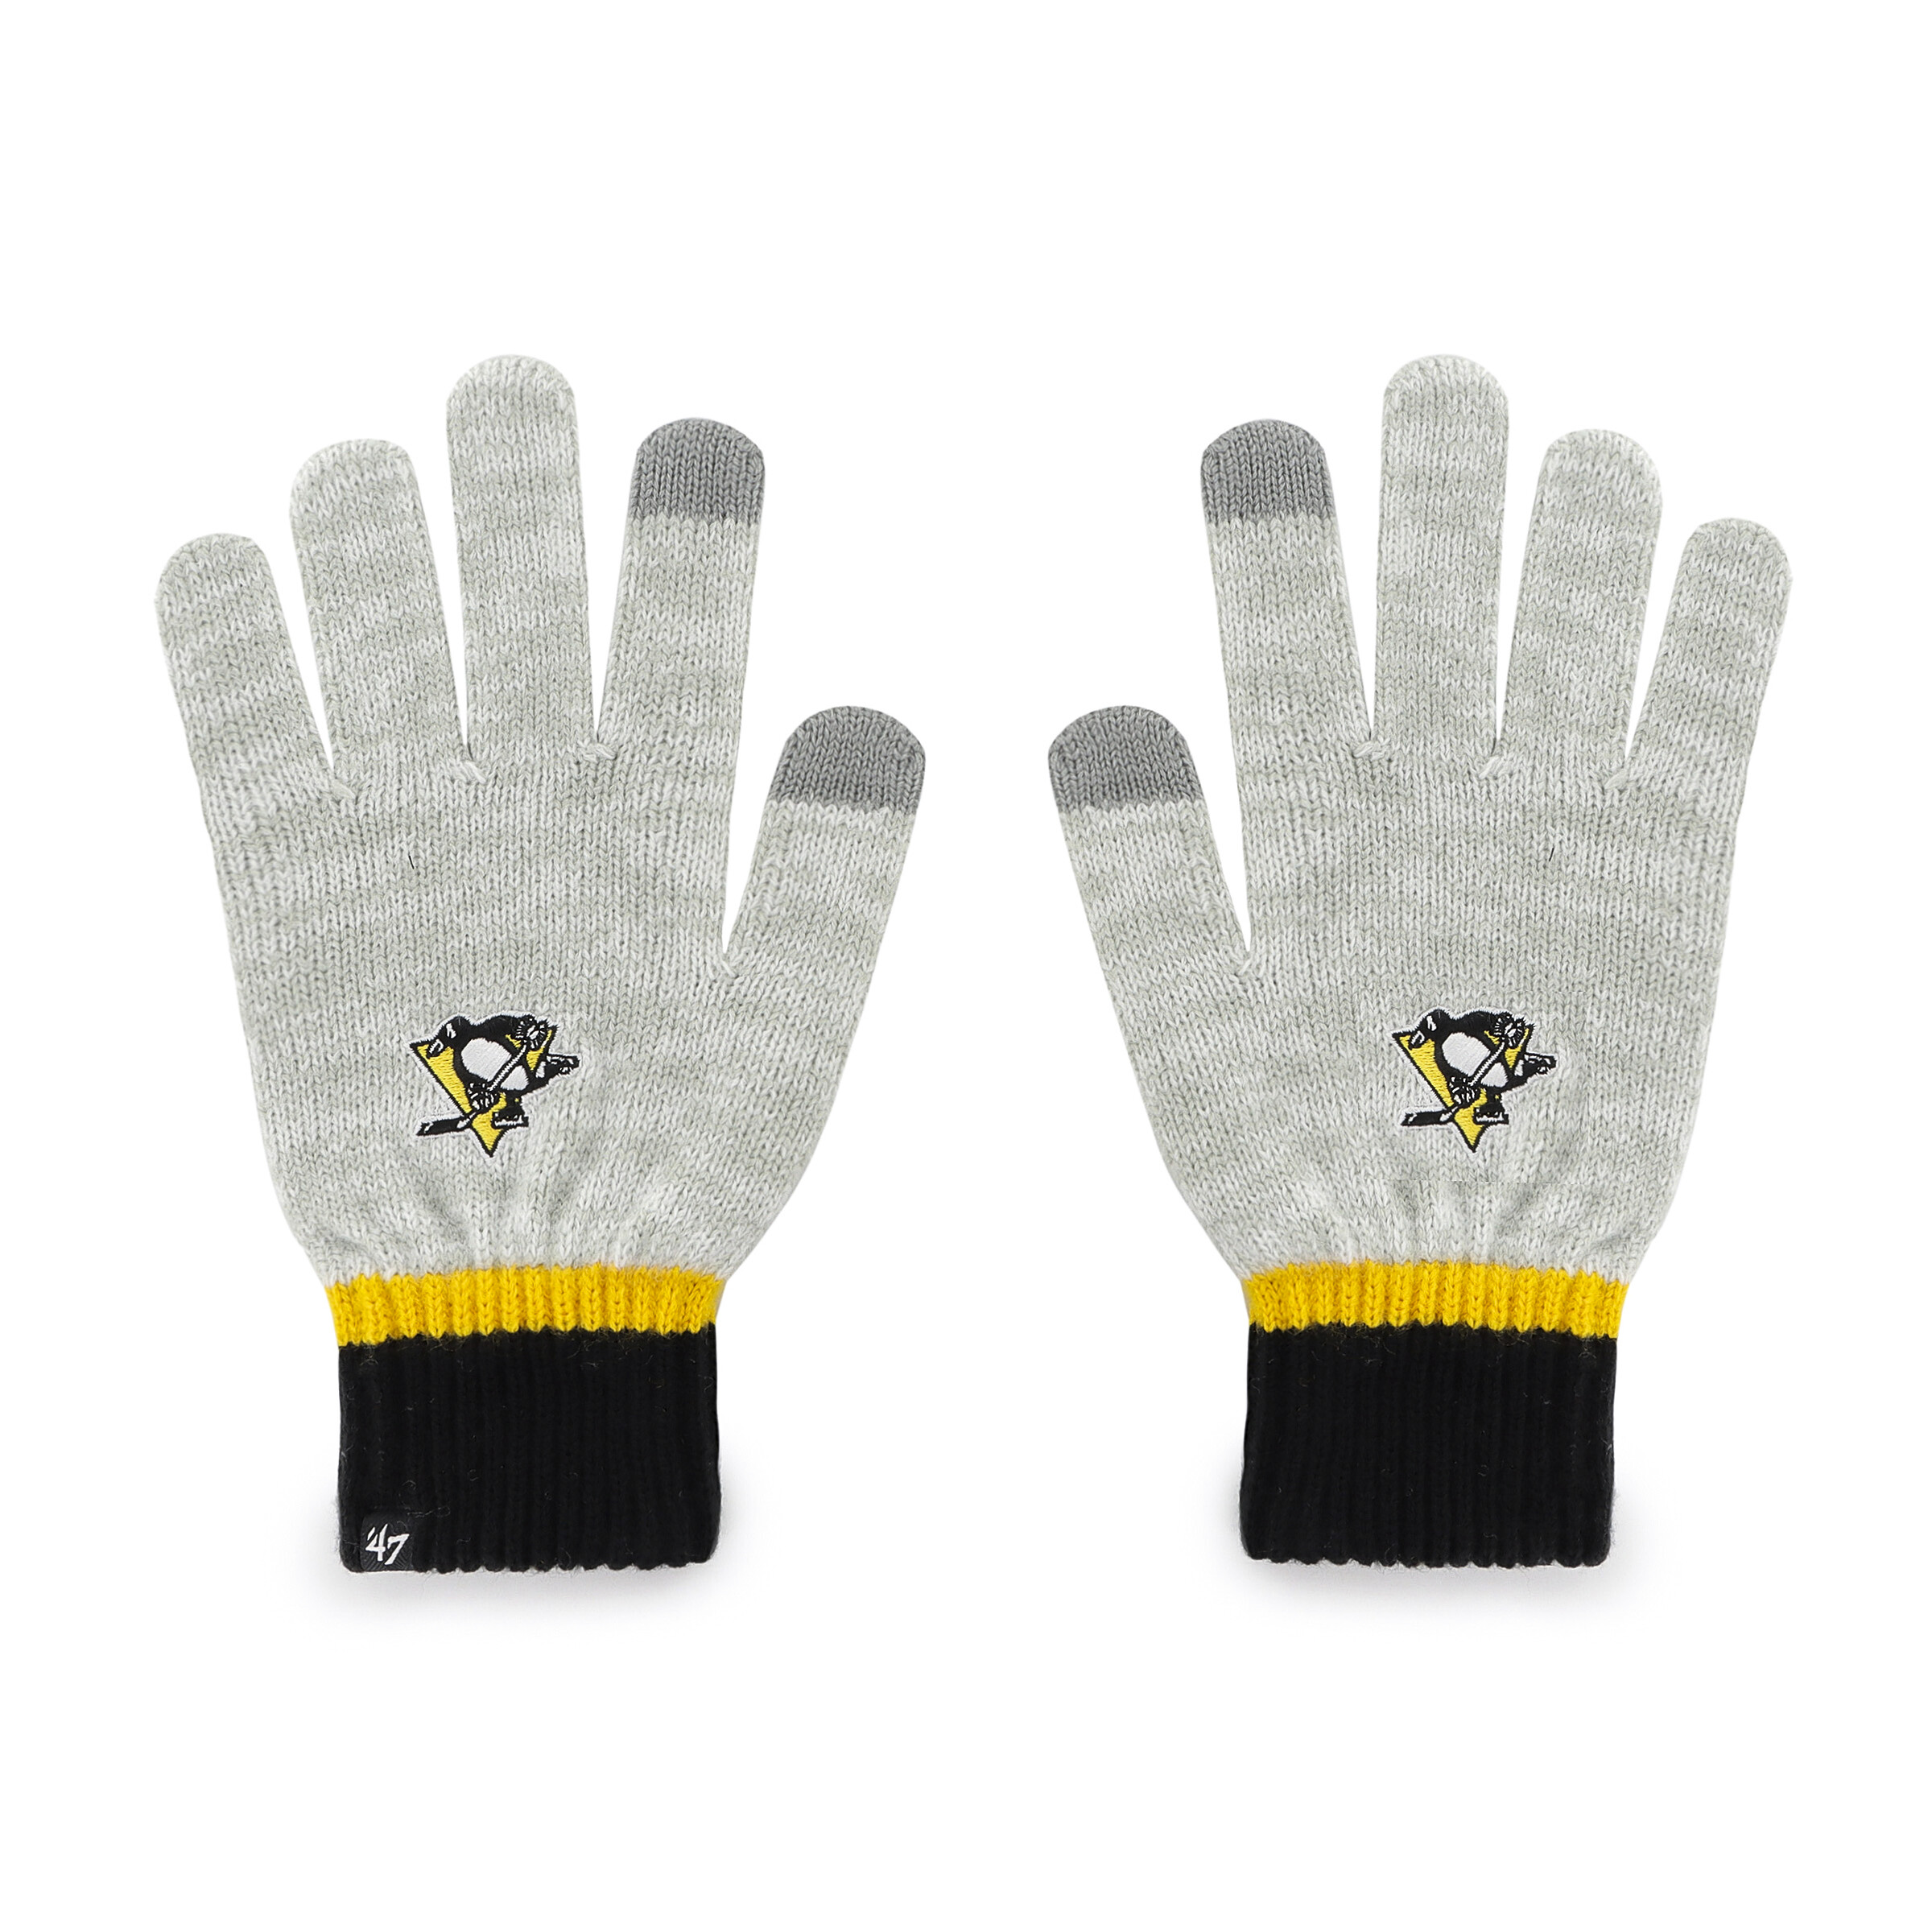 Männer 47 Marke NHL Pittsburgh Penguins Deep Zone Handschuhe '47 GLOVE